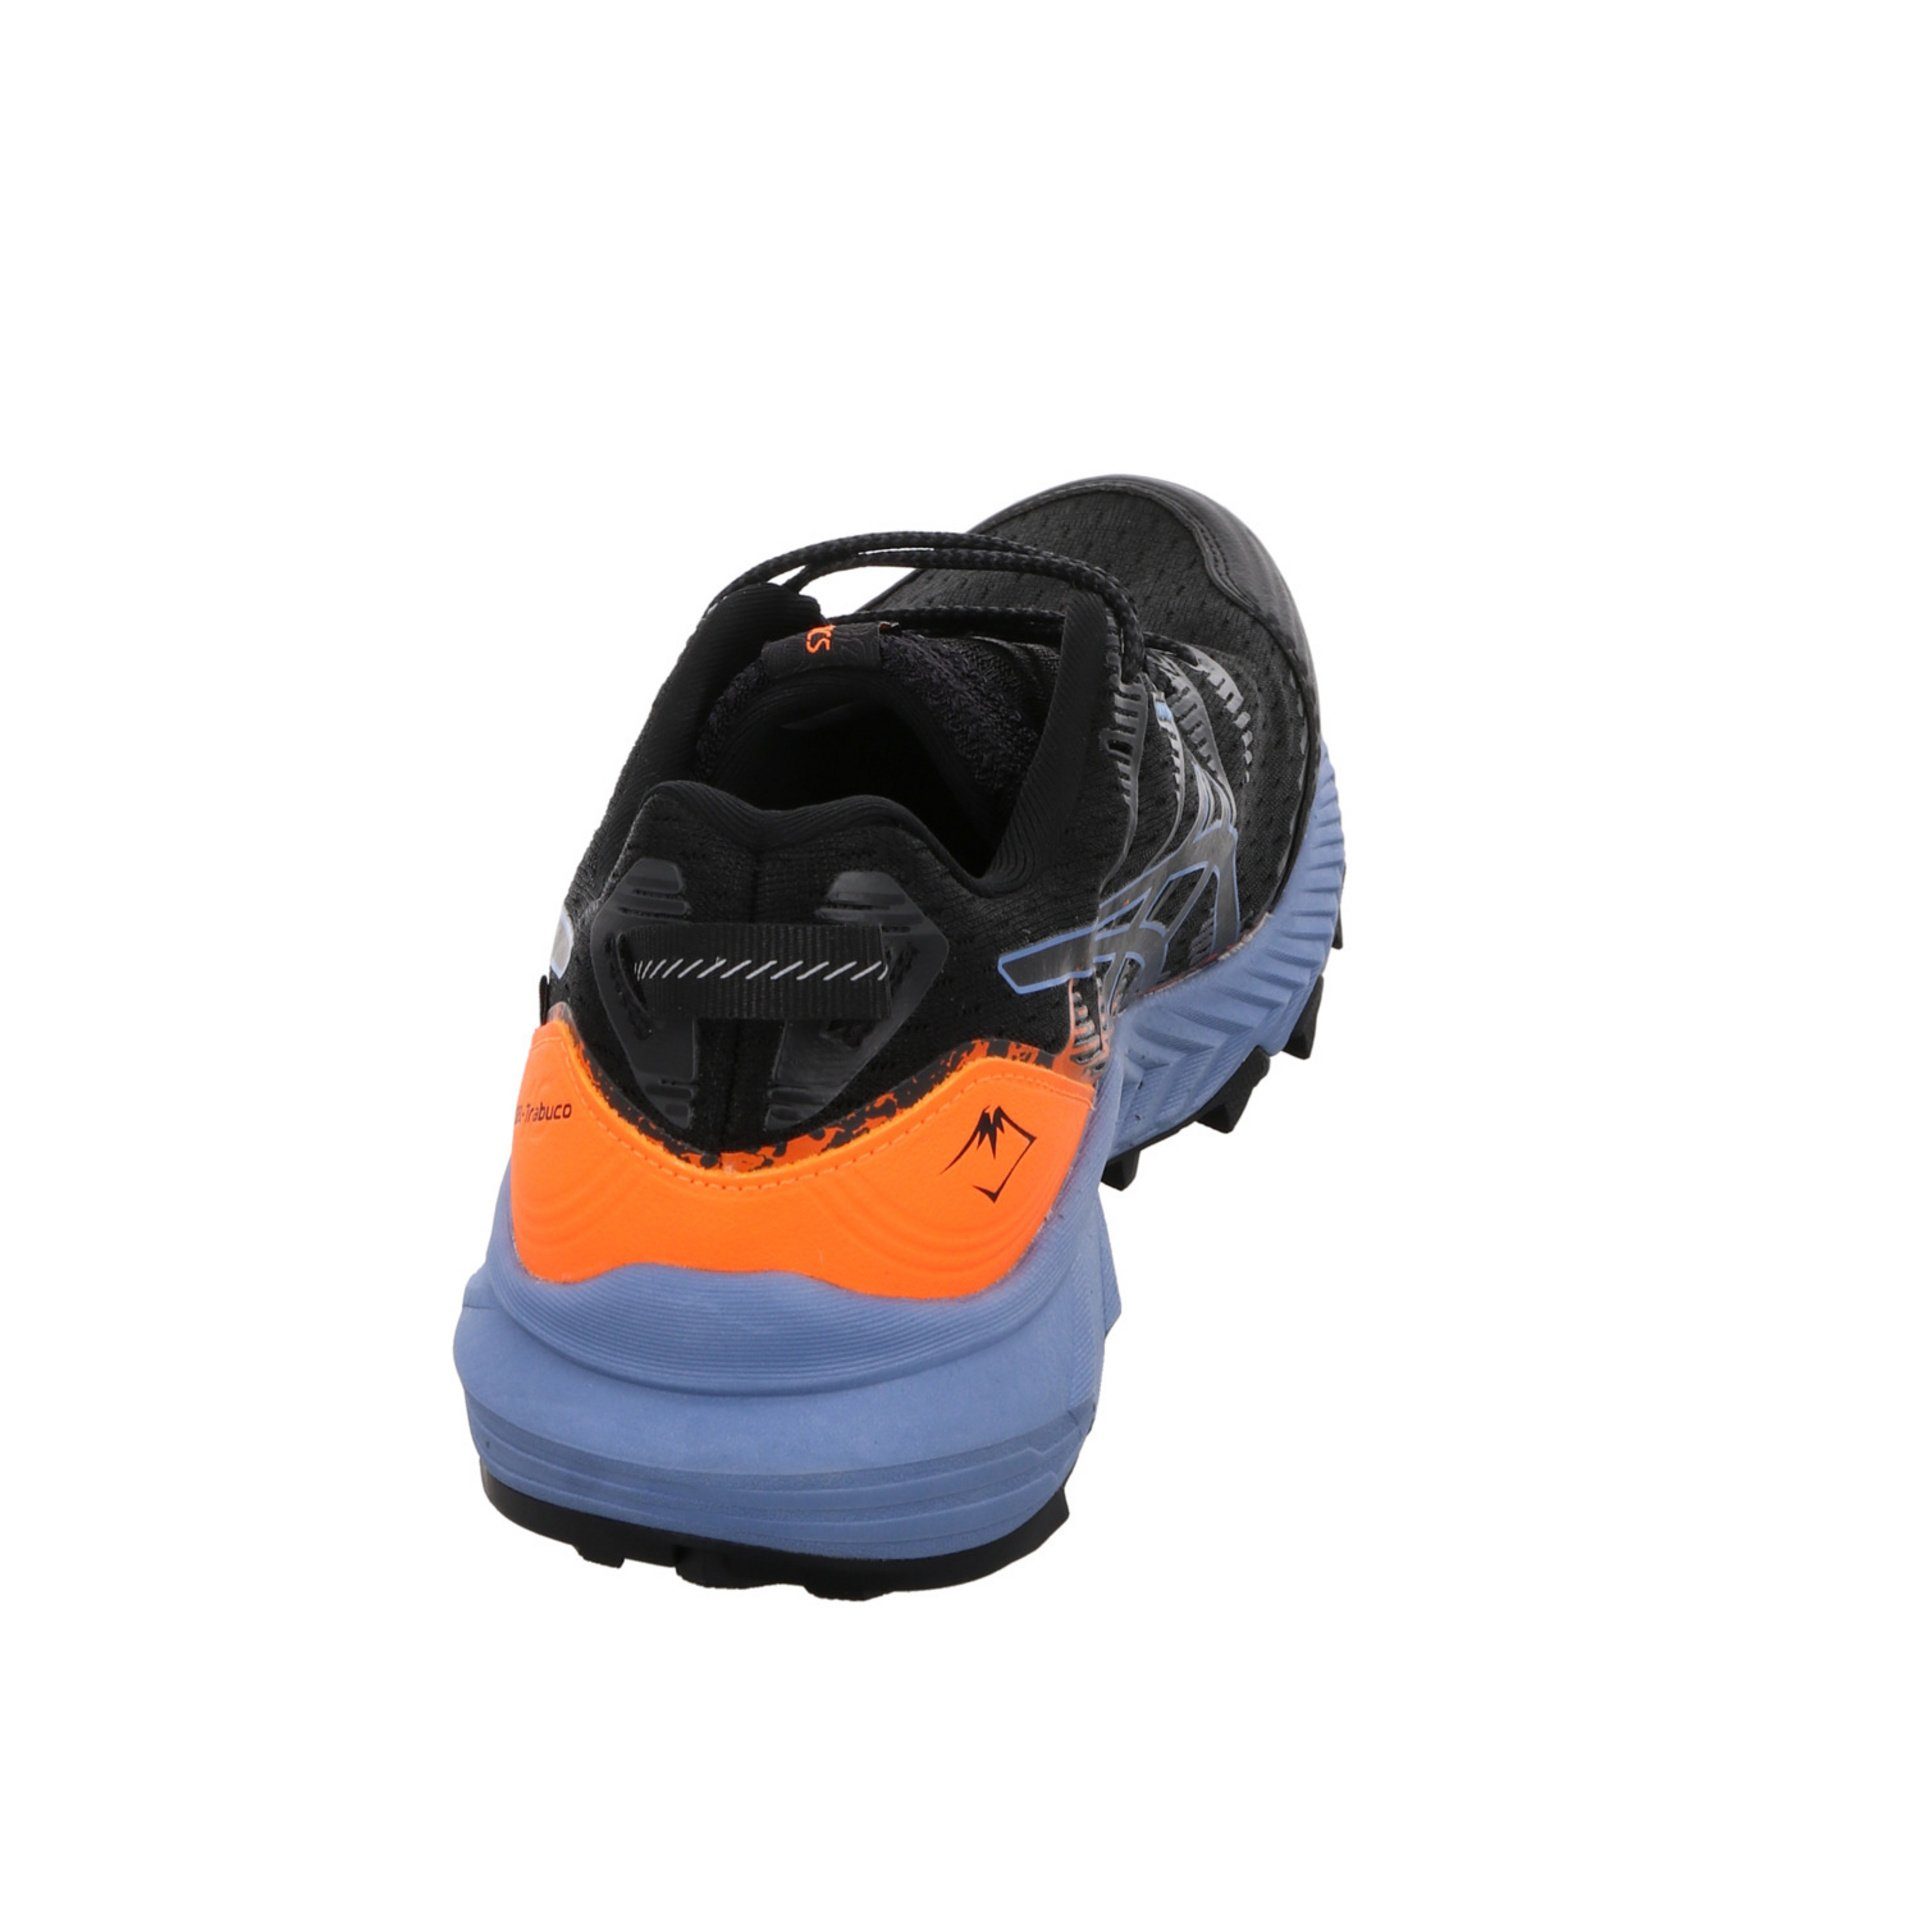 Asics Gel Trabuco 10 GTX Sneaker kombi-blau/g schwarz Synthetikkombination Trailrunner